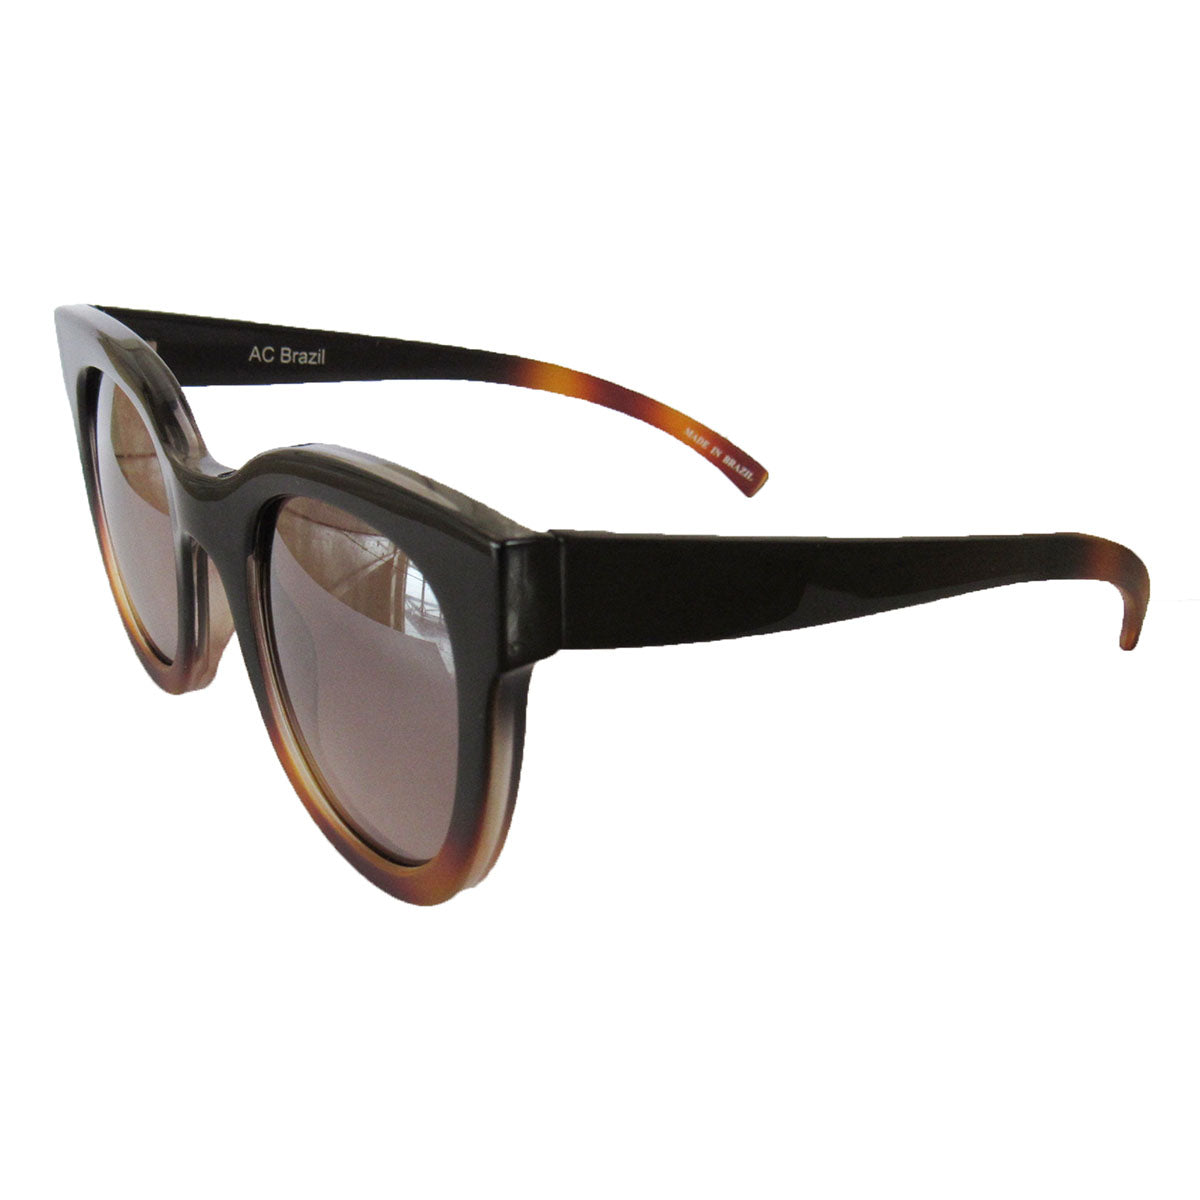 Small Square Black and Caramel Coloured Sunglasses w/ Silver Mirrored Lenses